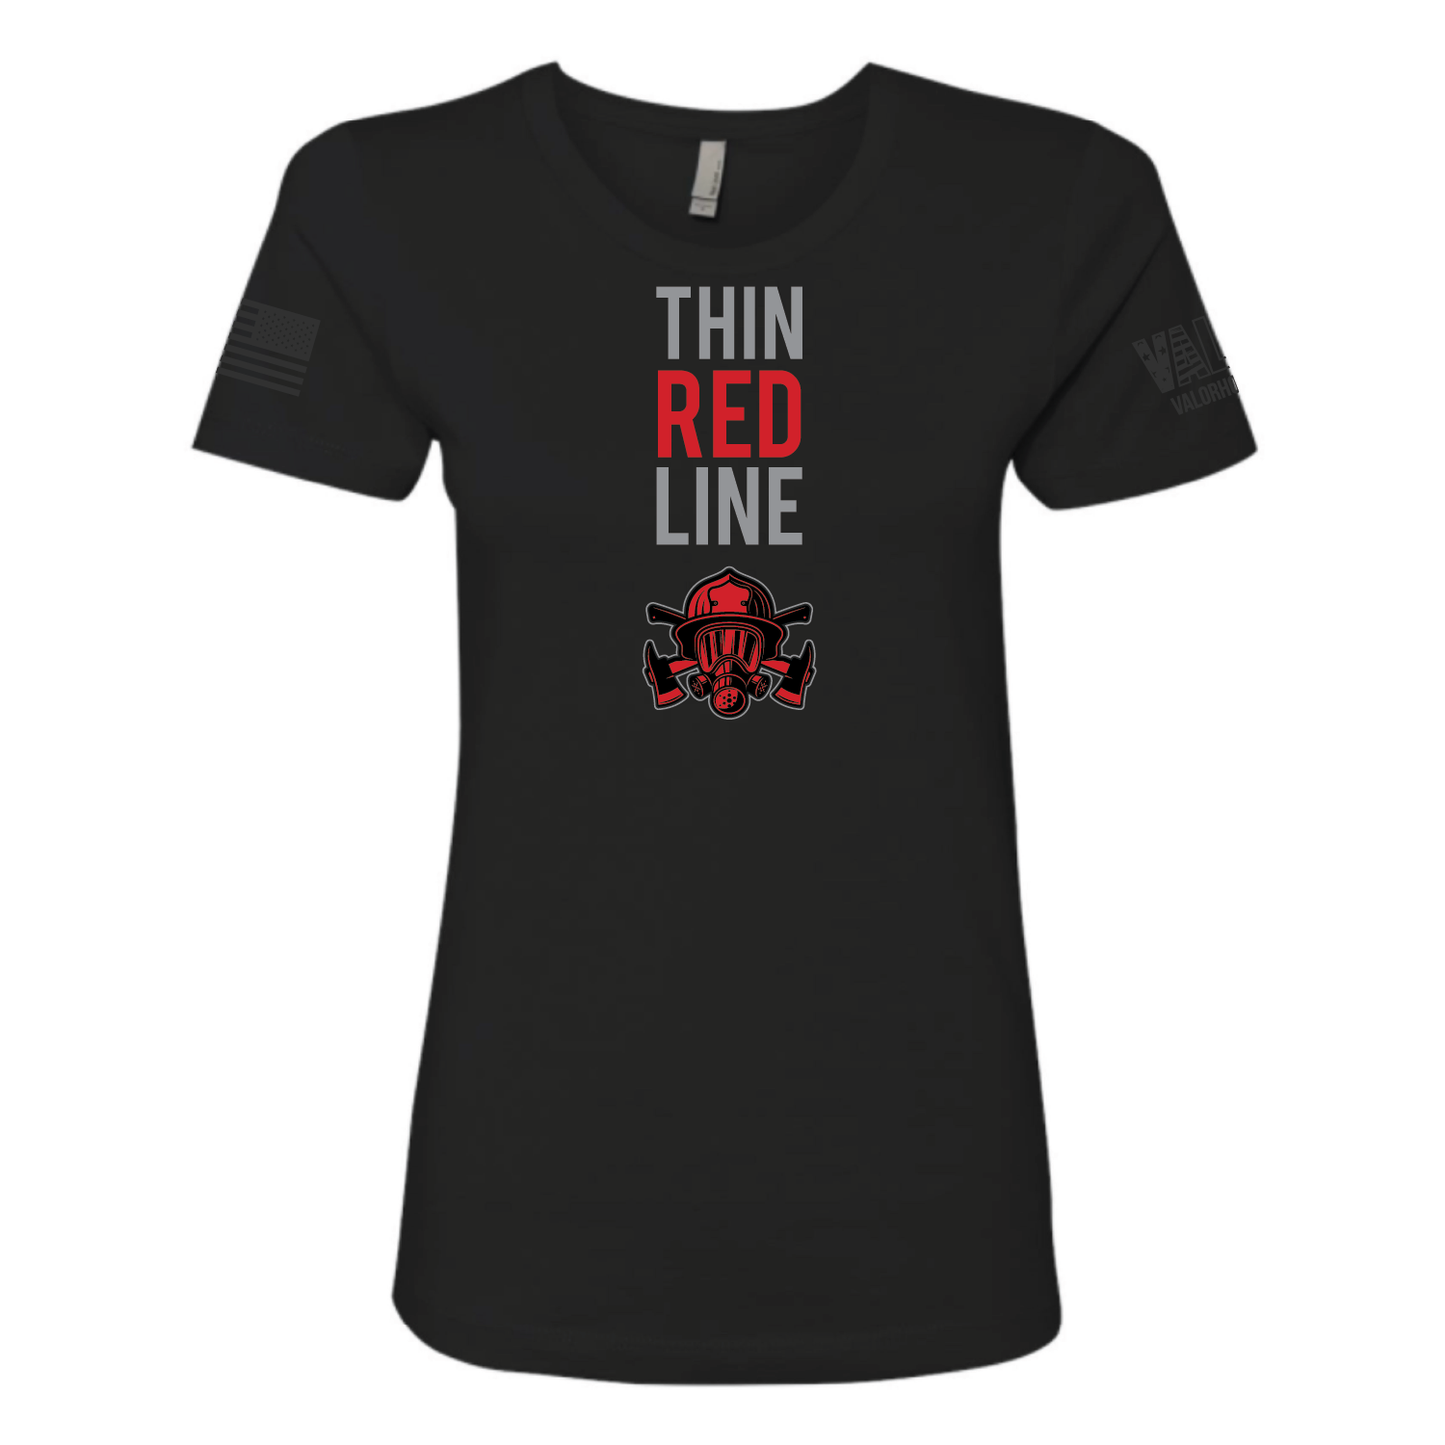 Ladies "Thin Red Line" Shirt